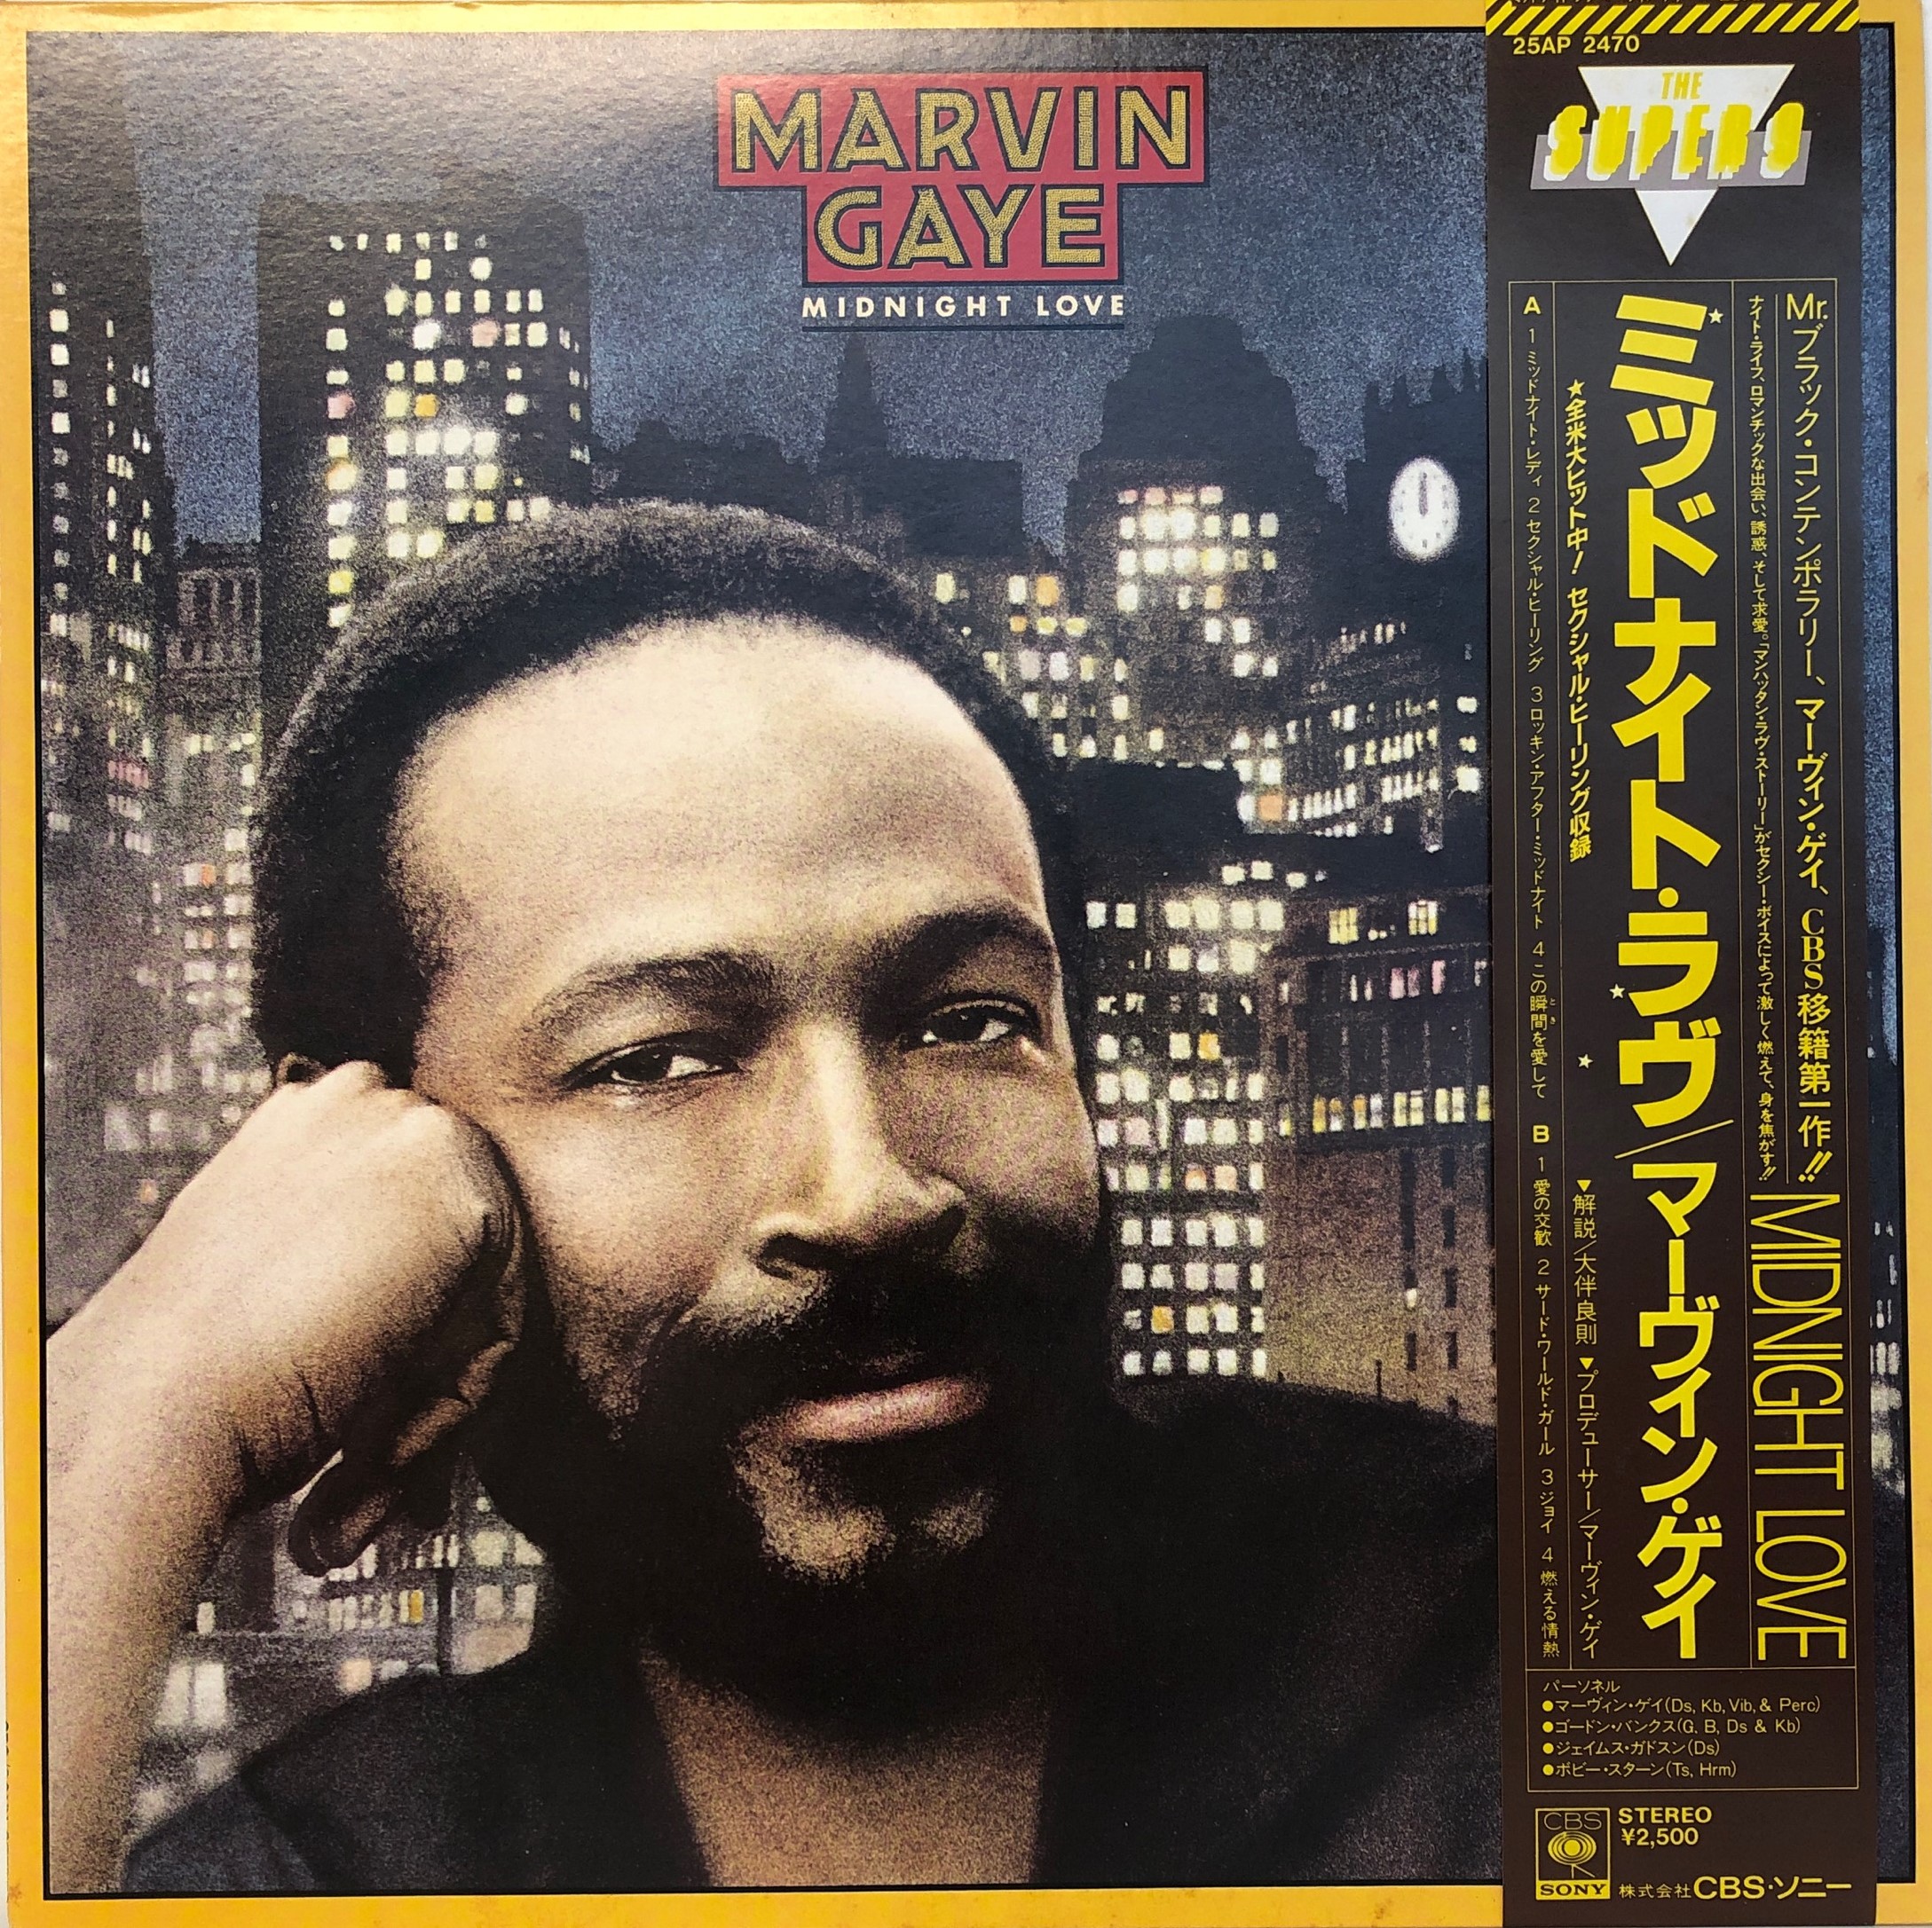 Marvin Gaye - Midnight Love | 中古レコード通販・買取のアカル・レコーズ